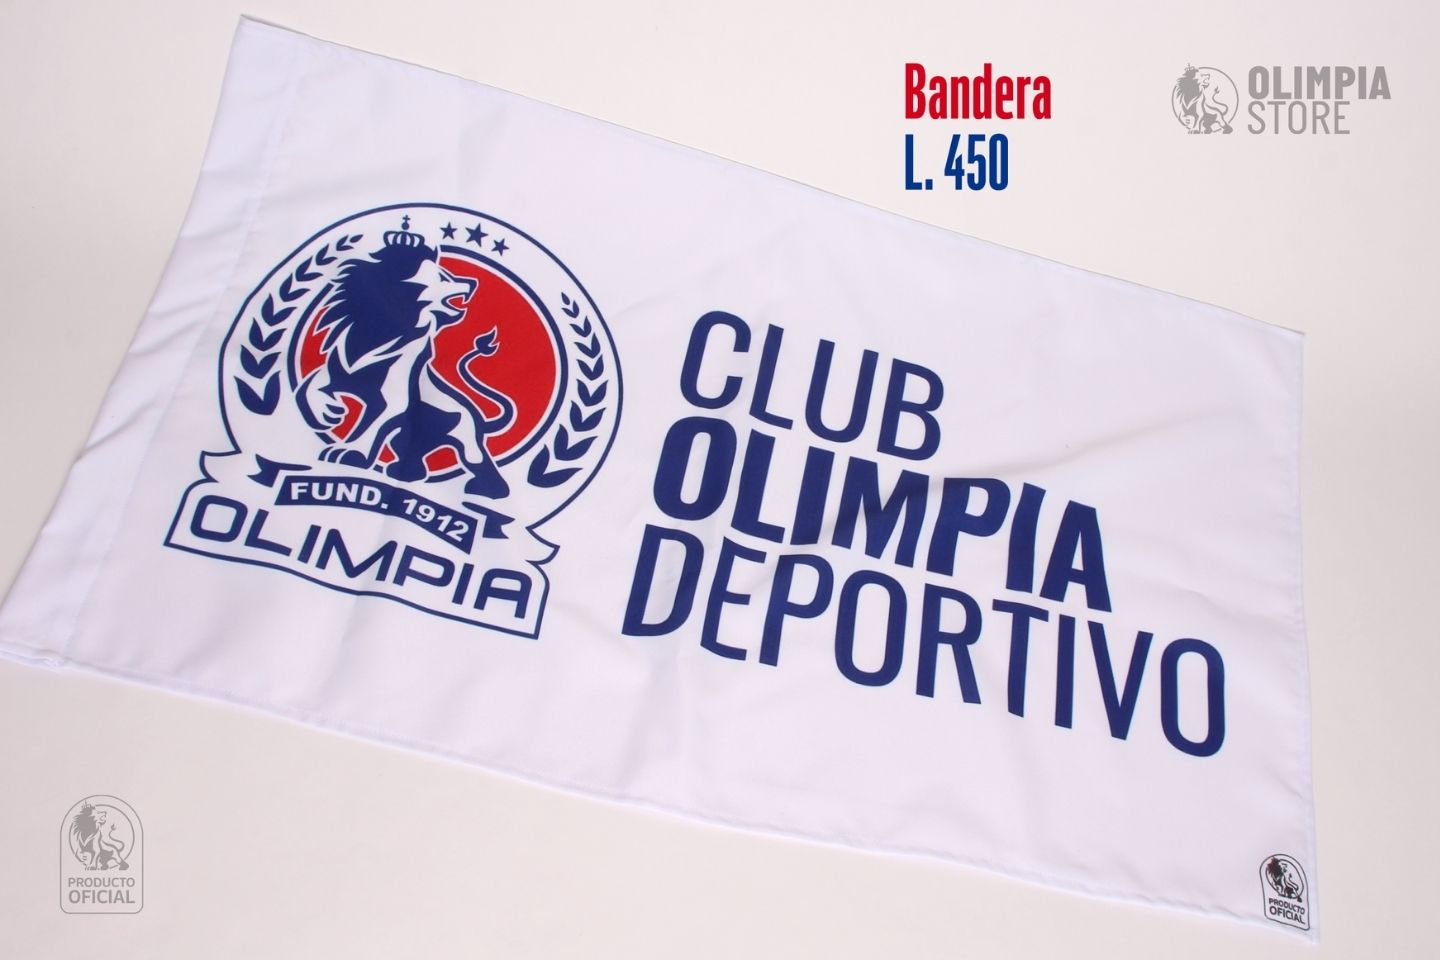 Bandera Olimpia